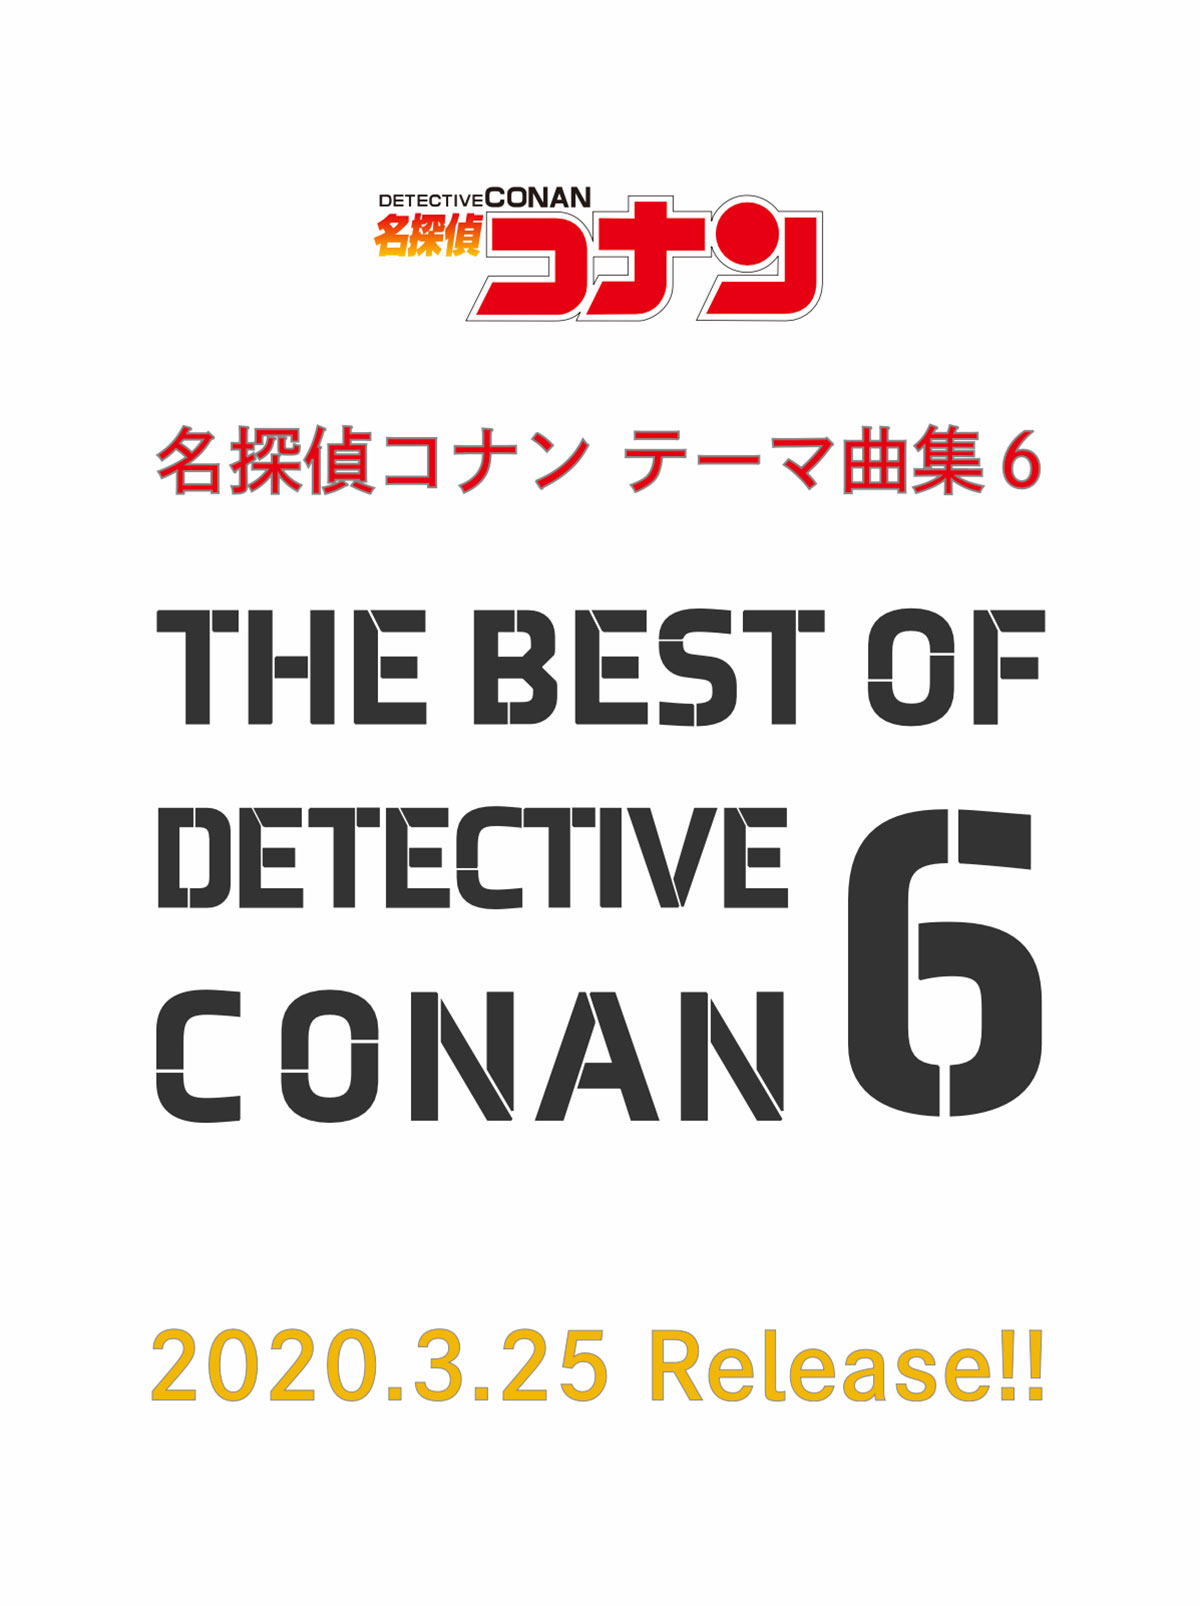 B Z 稲葉浩志などの話題曲収録 伝説の コナンベスト 第6弾がリリース決定 名探偵コナン Conan コナンop コナンed 超 ウルトラ 速報